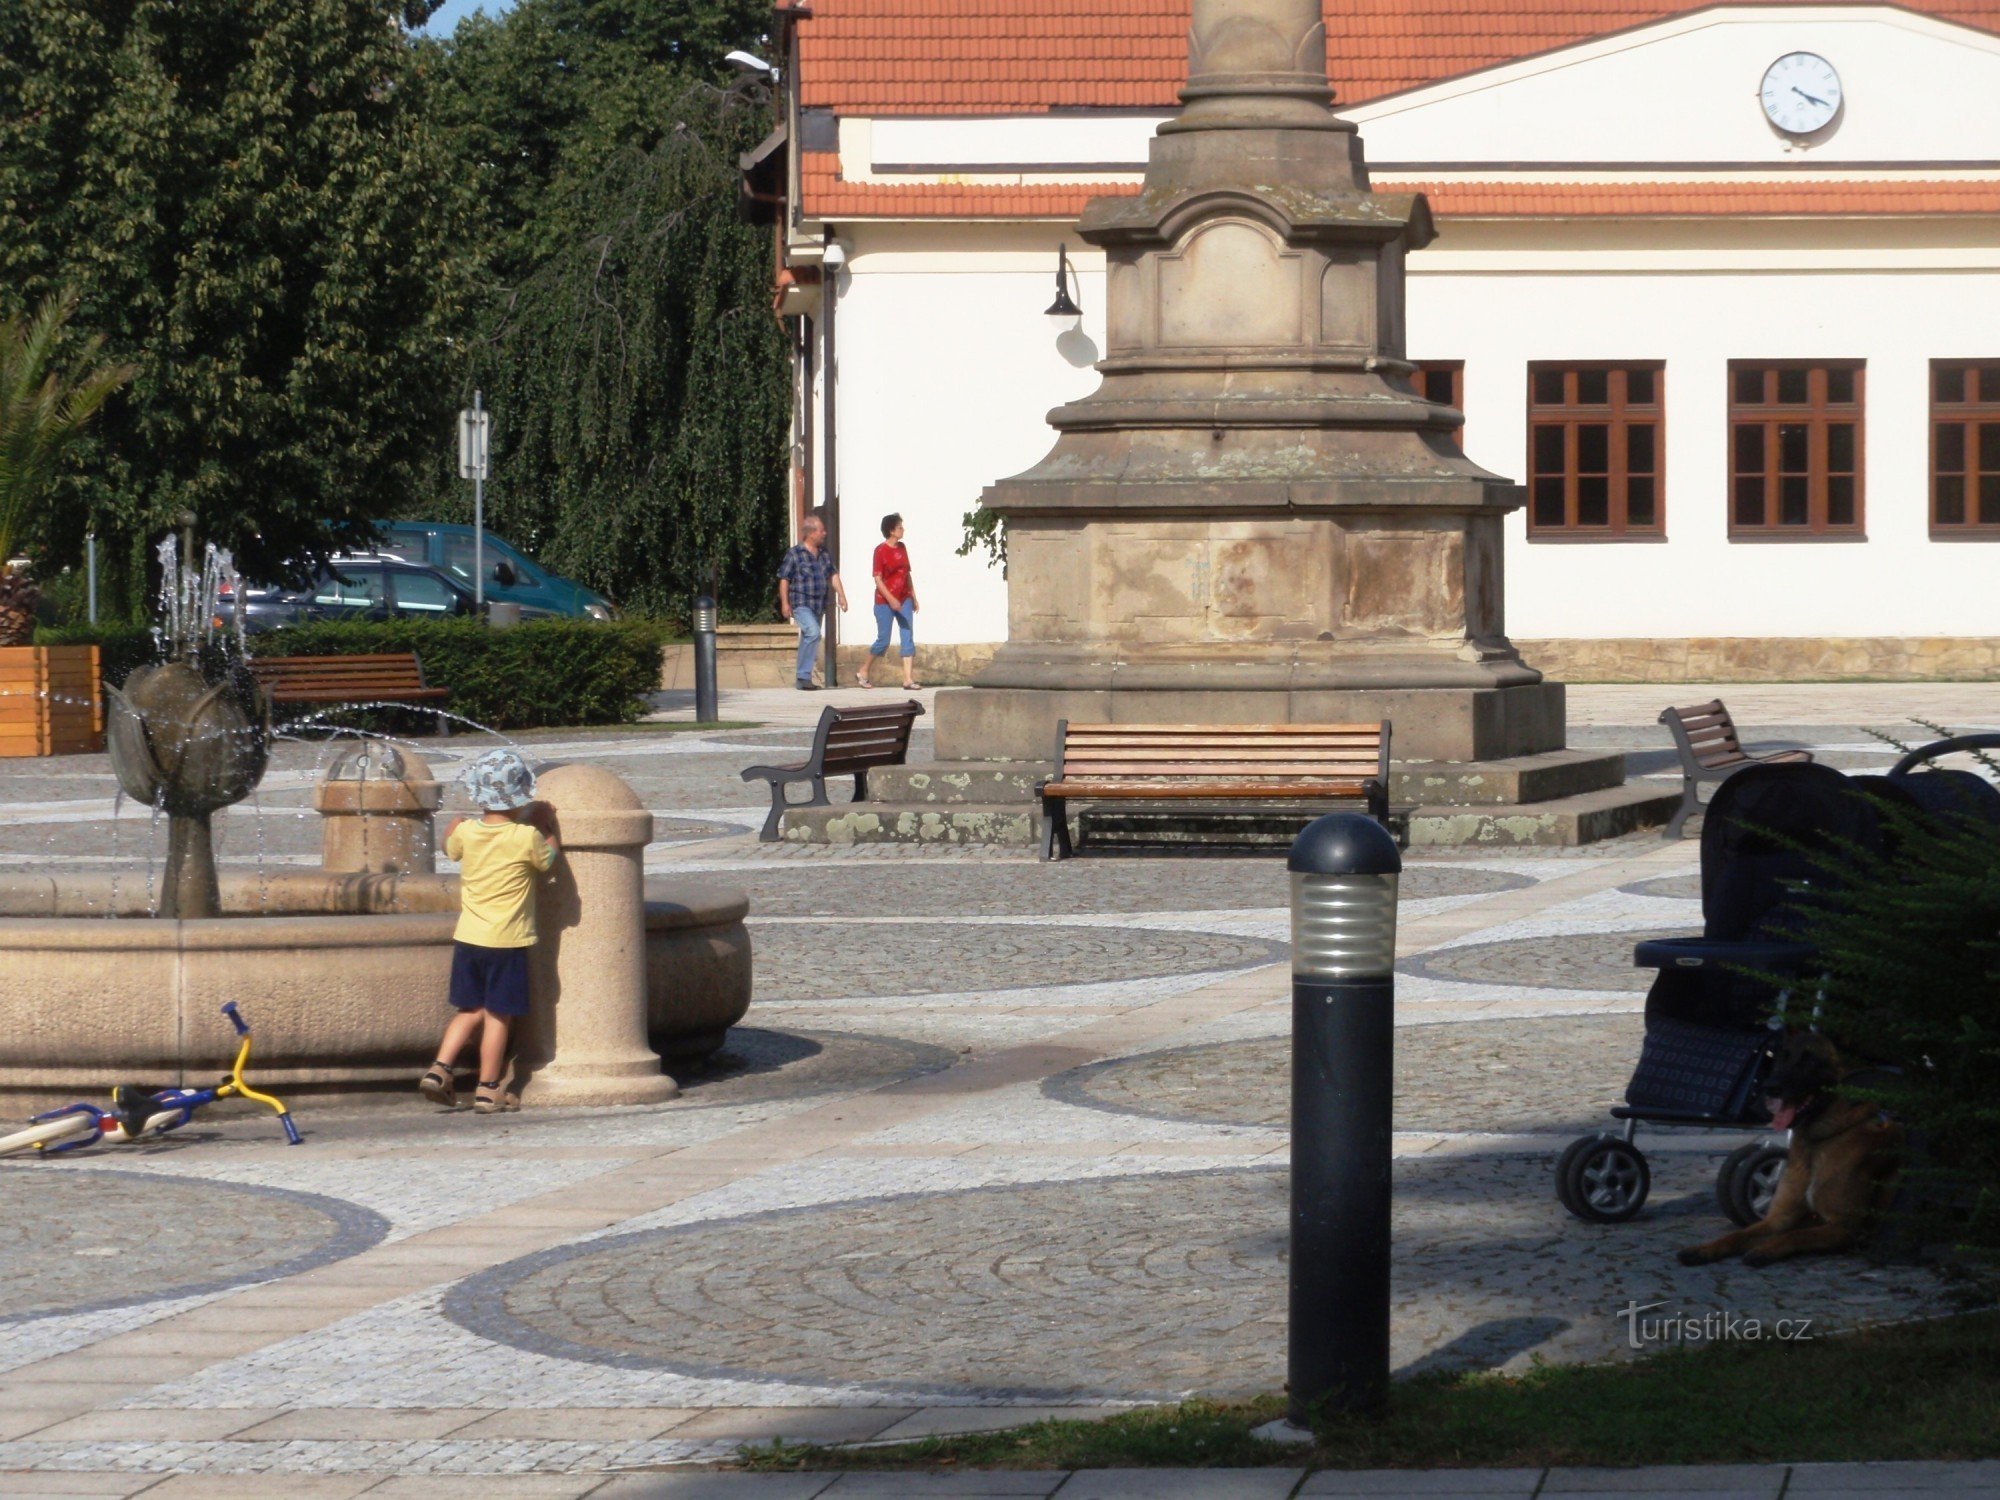 Små monumenter i byen Buchlovic